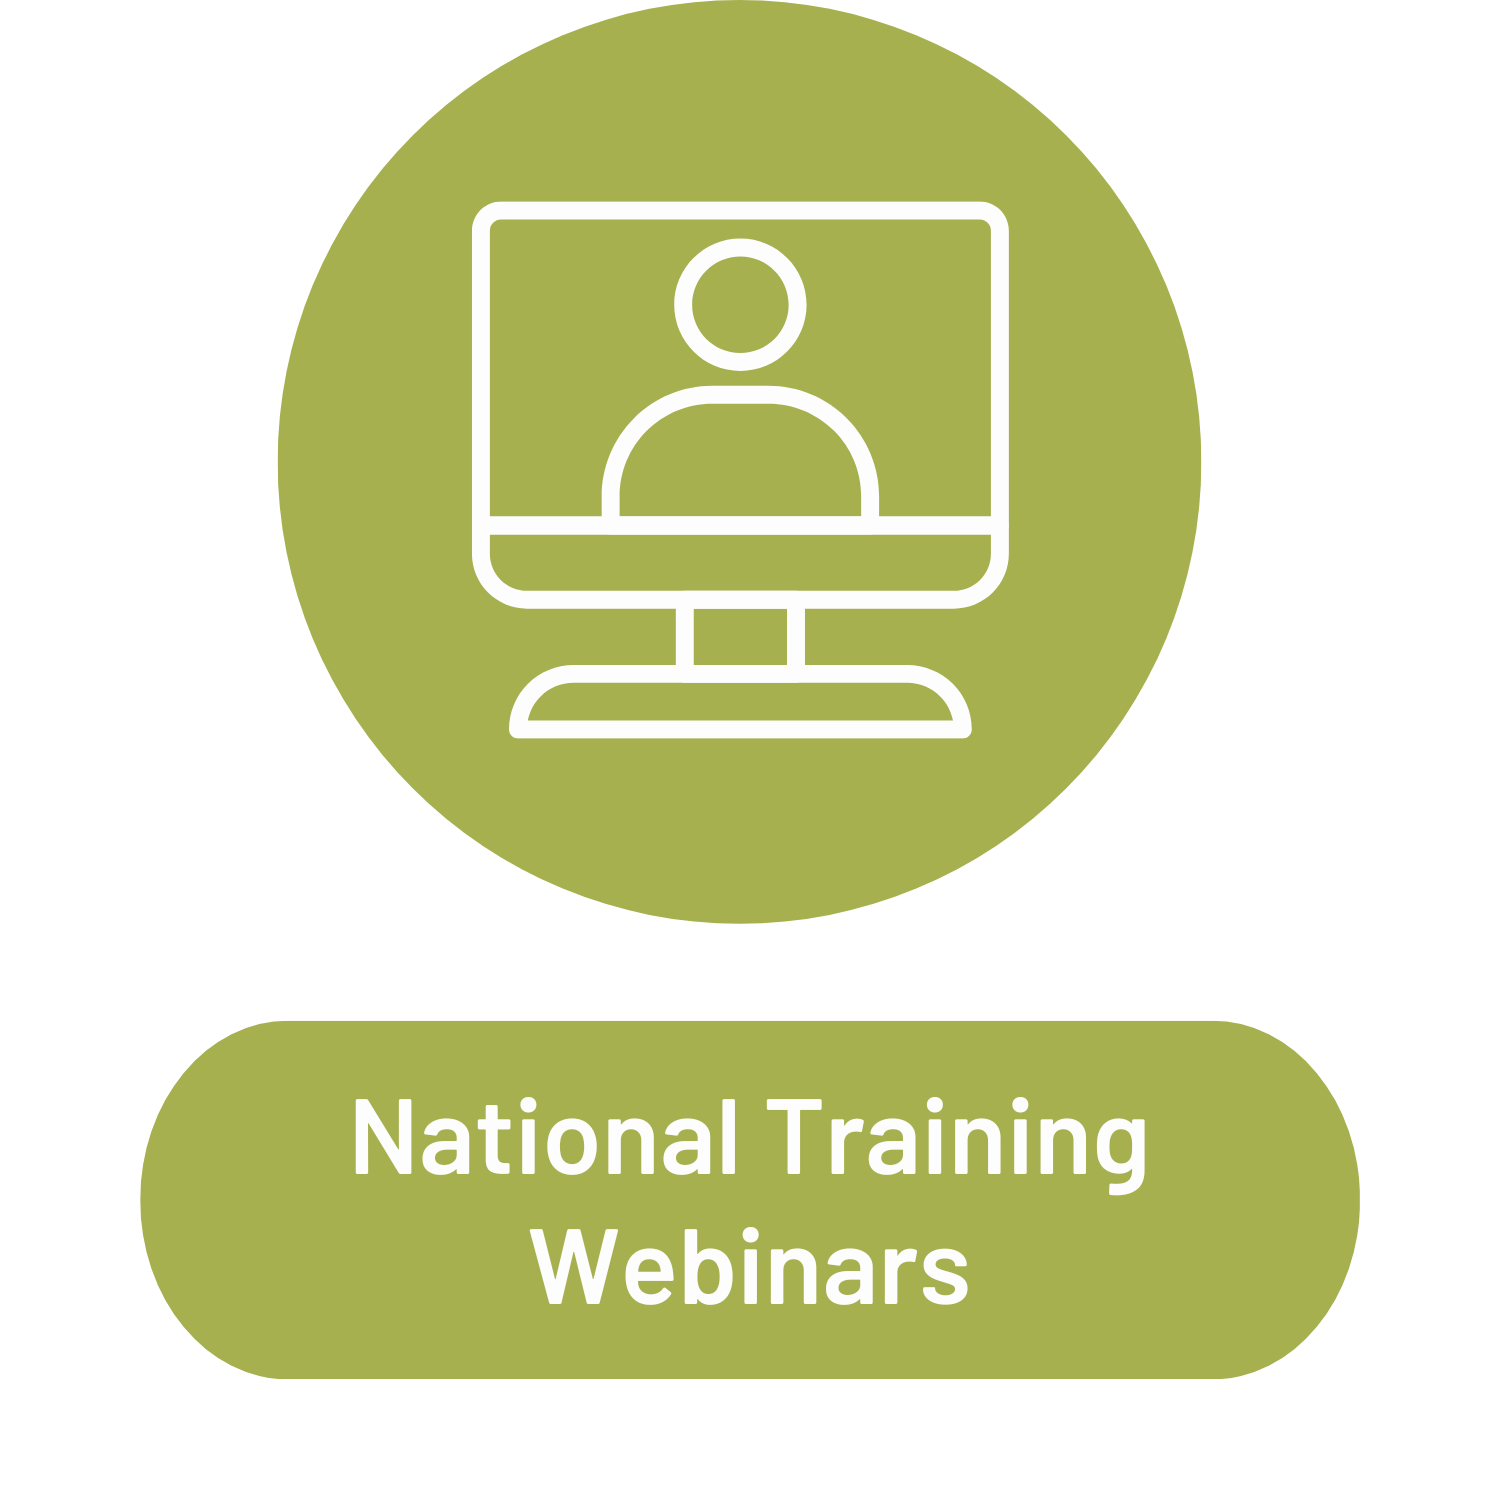 National Training Webinars